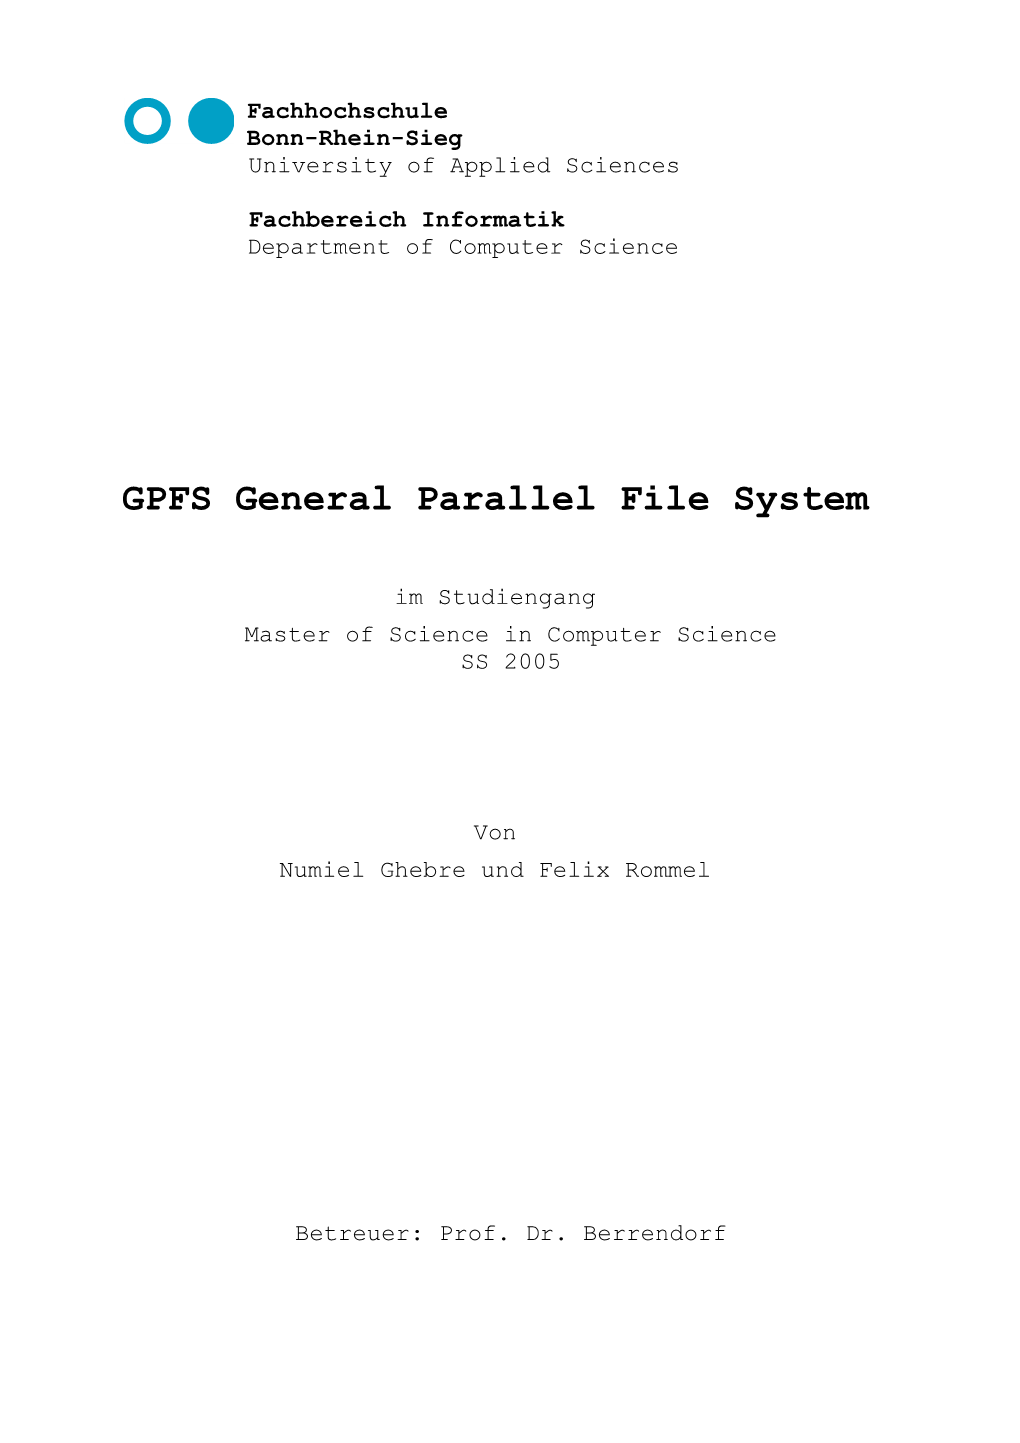 GPFS General Parallel File System